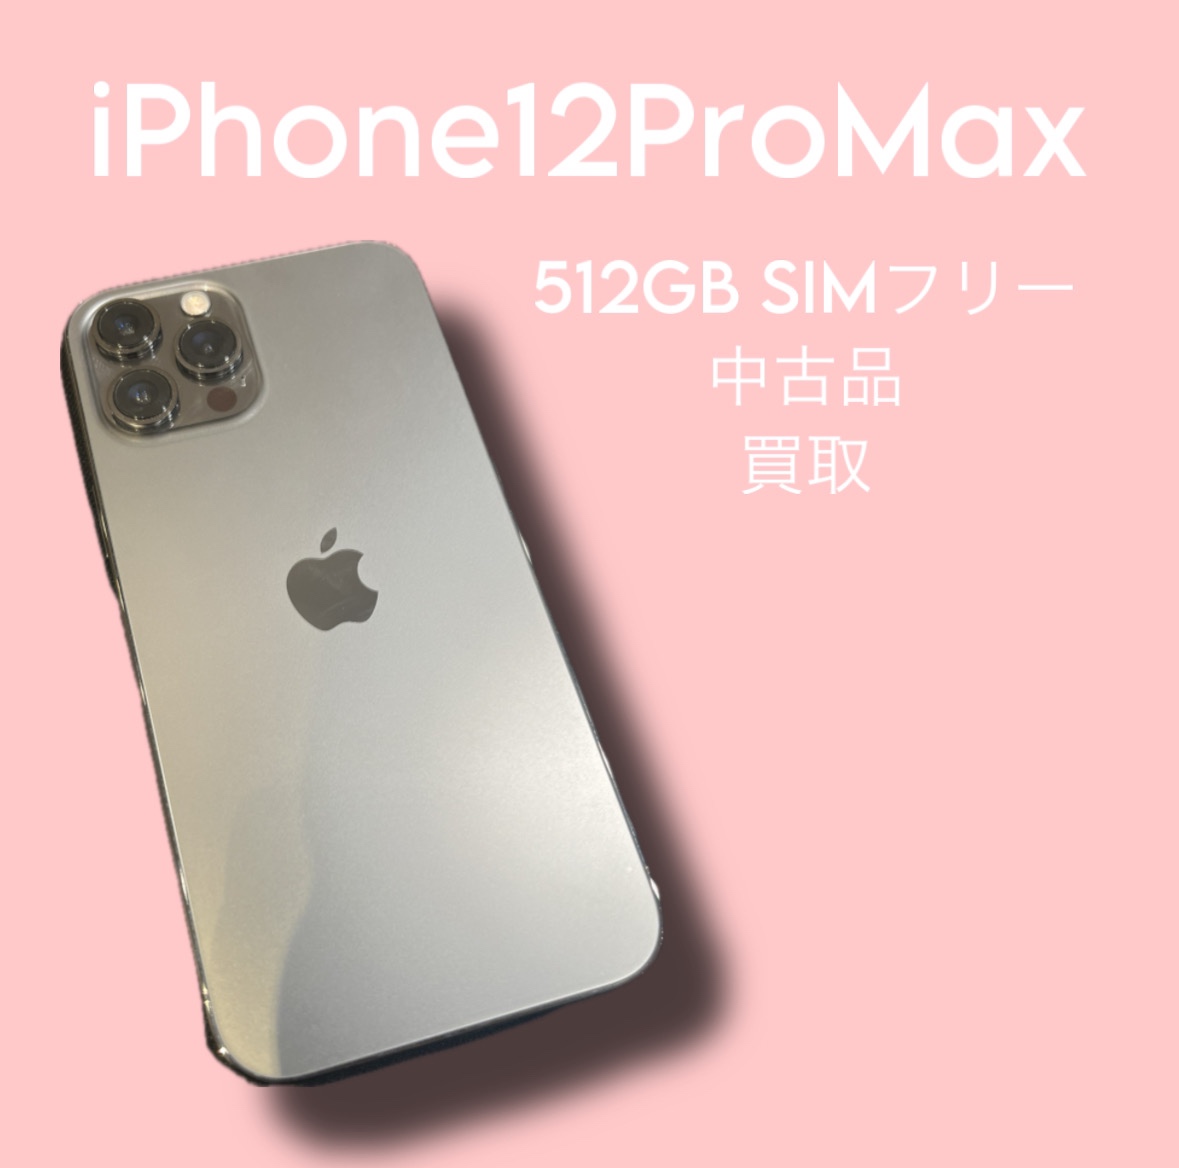 iPhone12ProMax・512GB・SIMフリー・ネット制限-【天神地下街店】